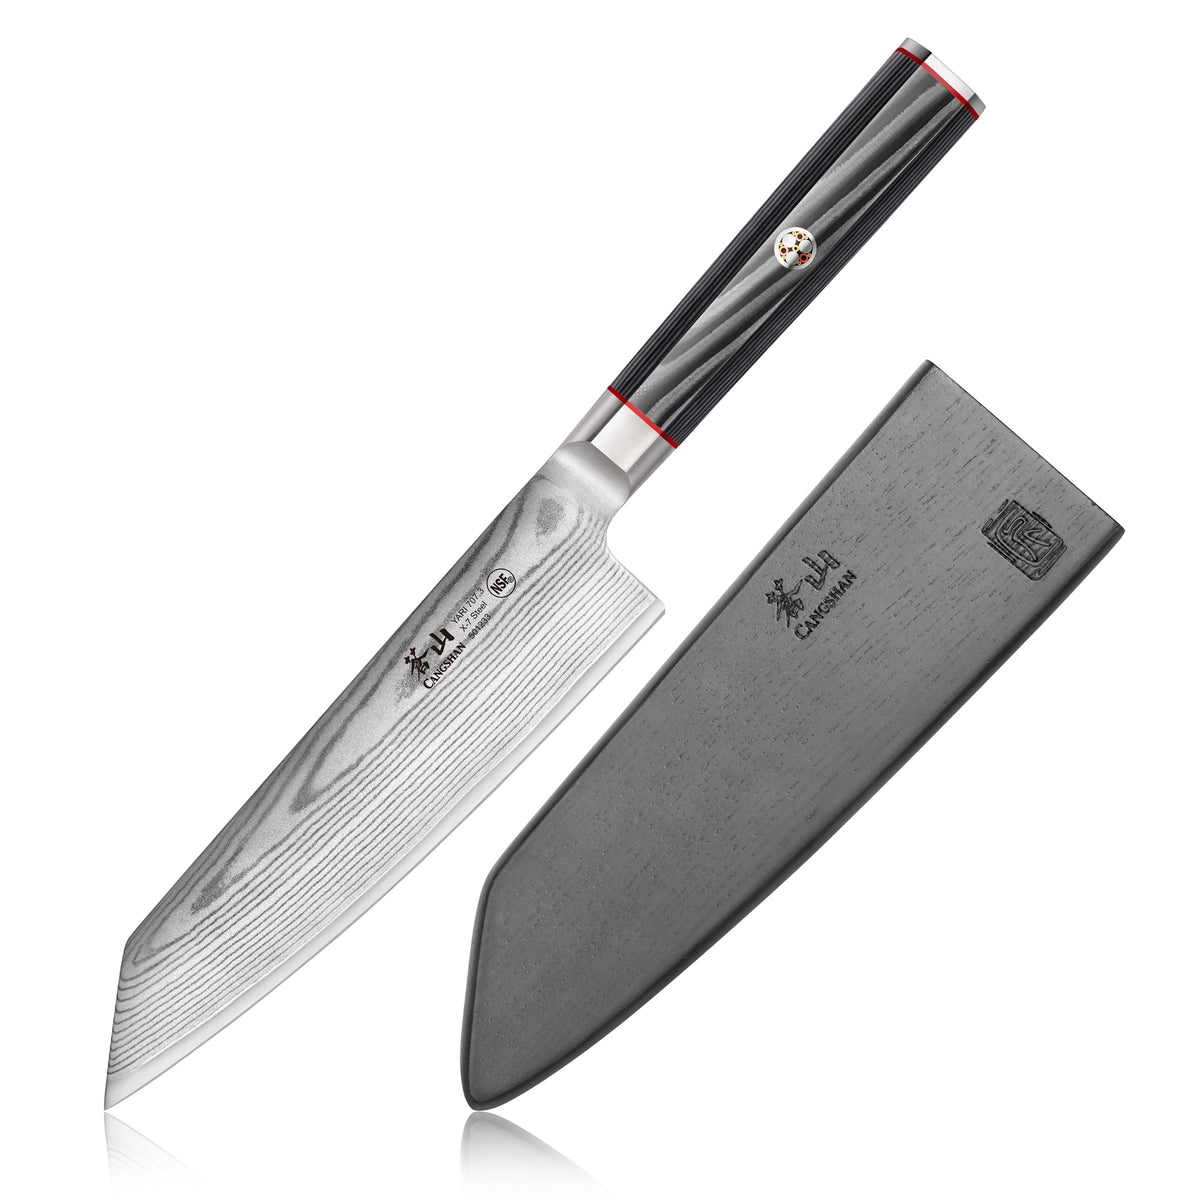 Master Series Japanese Damascus Steel Knife Set, 7pc – HexClad